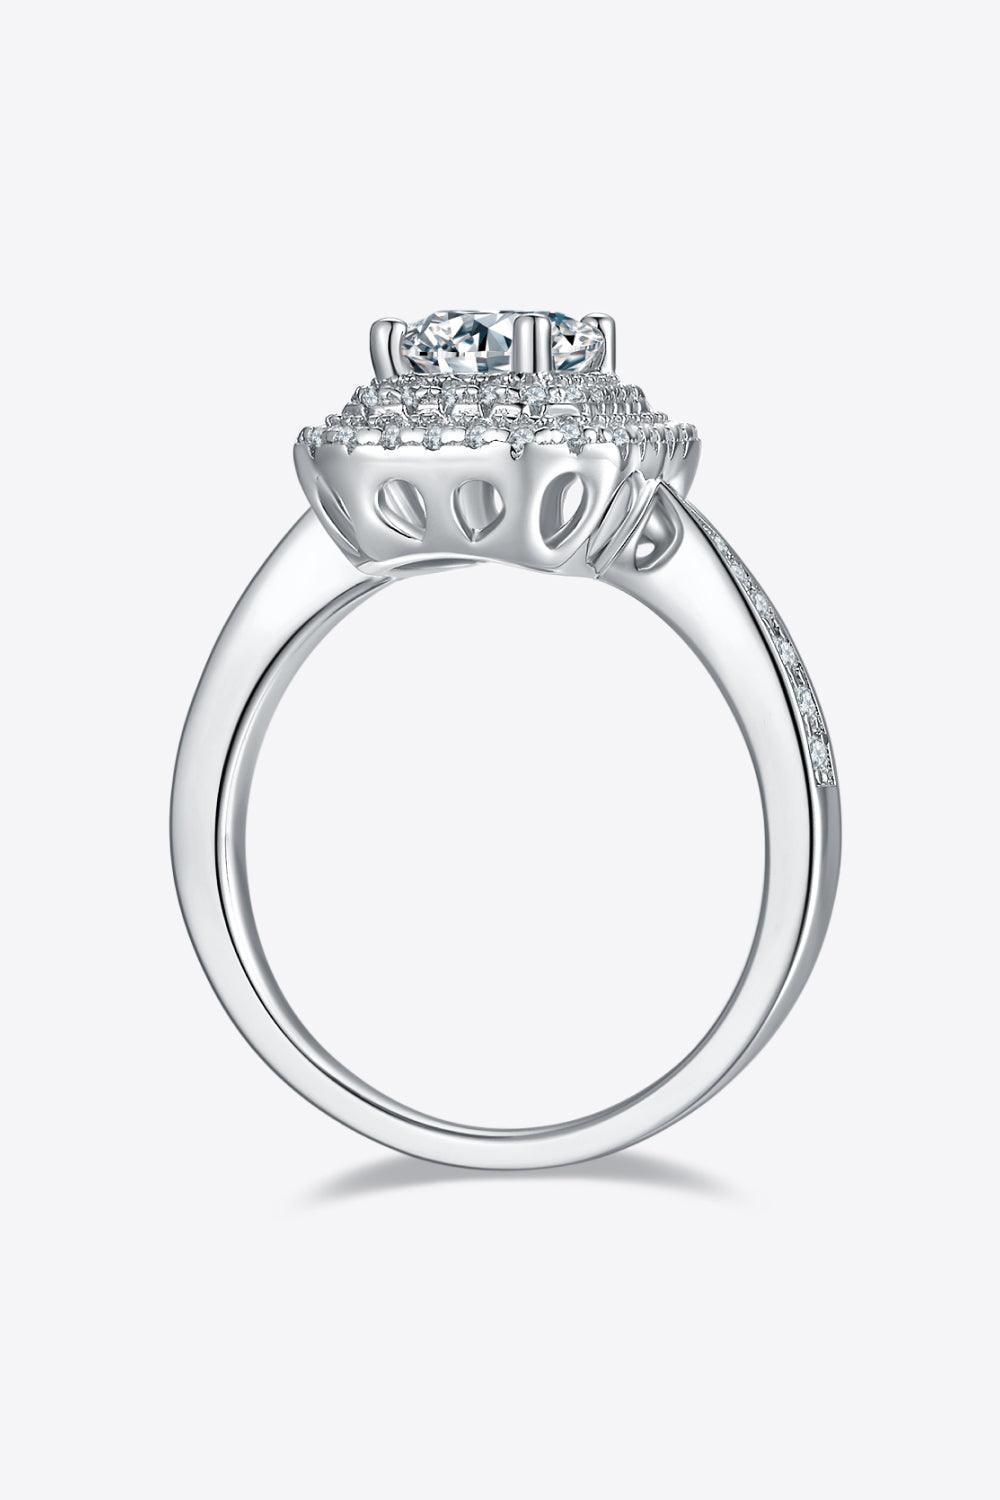 Complete Luxury Side Stone 1 Carat Moissanite Ring - MXSTUDIO.COM